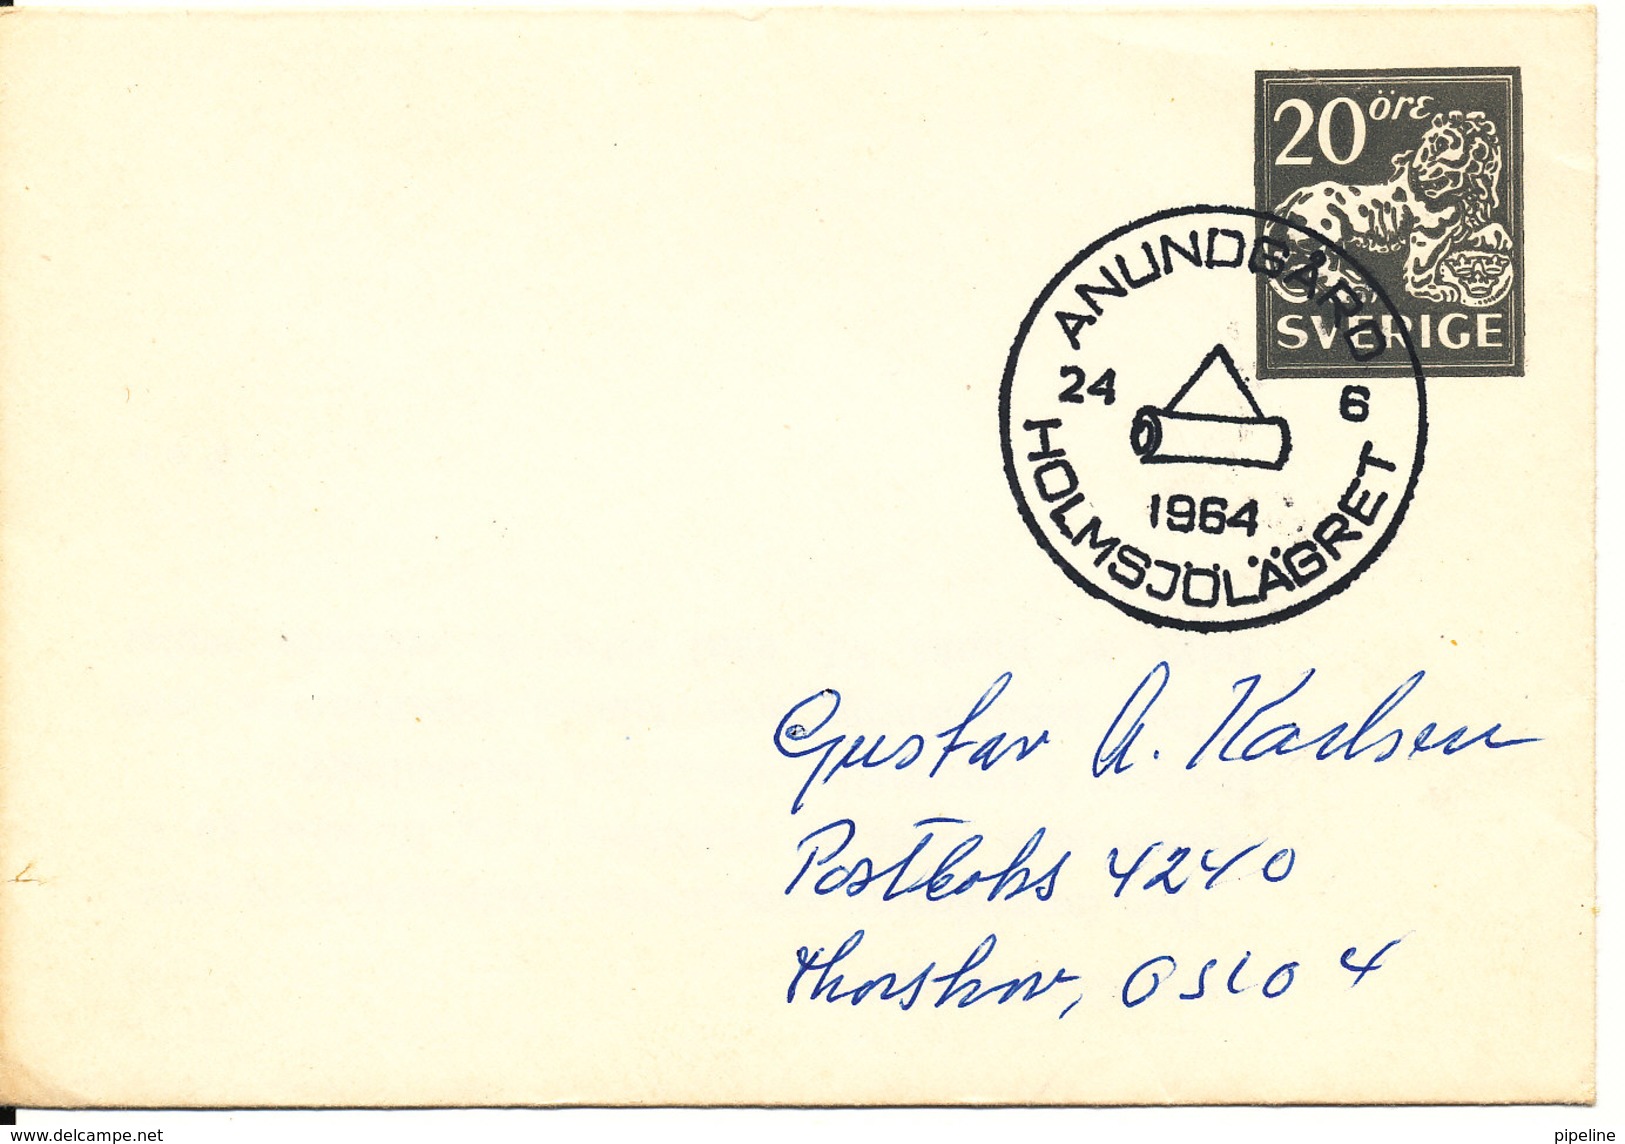 Sweden Small Postal Stationery Cover With Special Postmark Holmsjölägret Anundgard 24-6-1964 - Postal Stationery